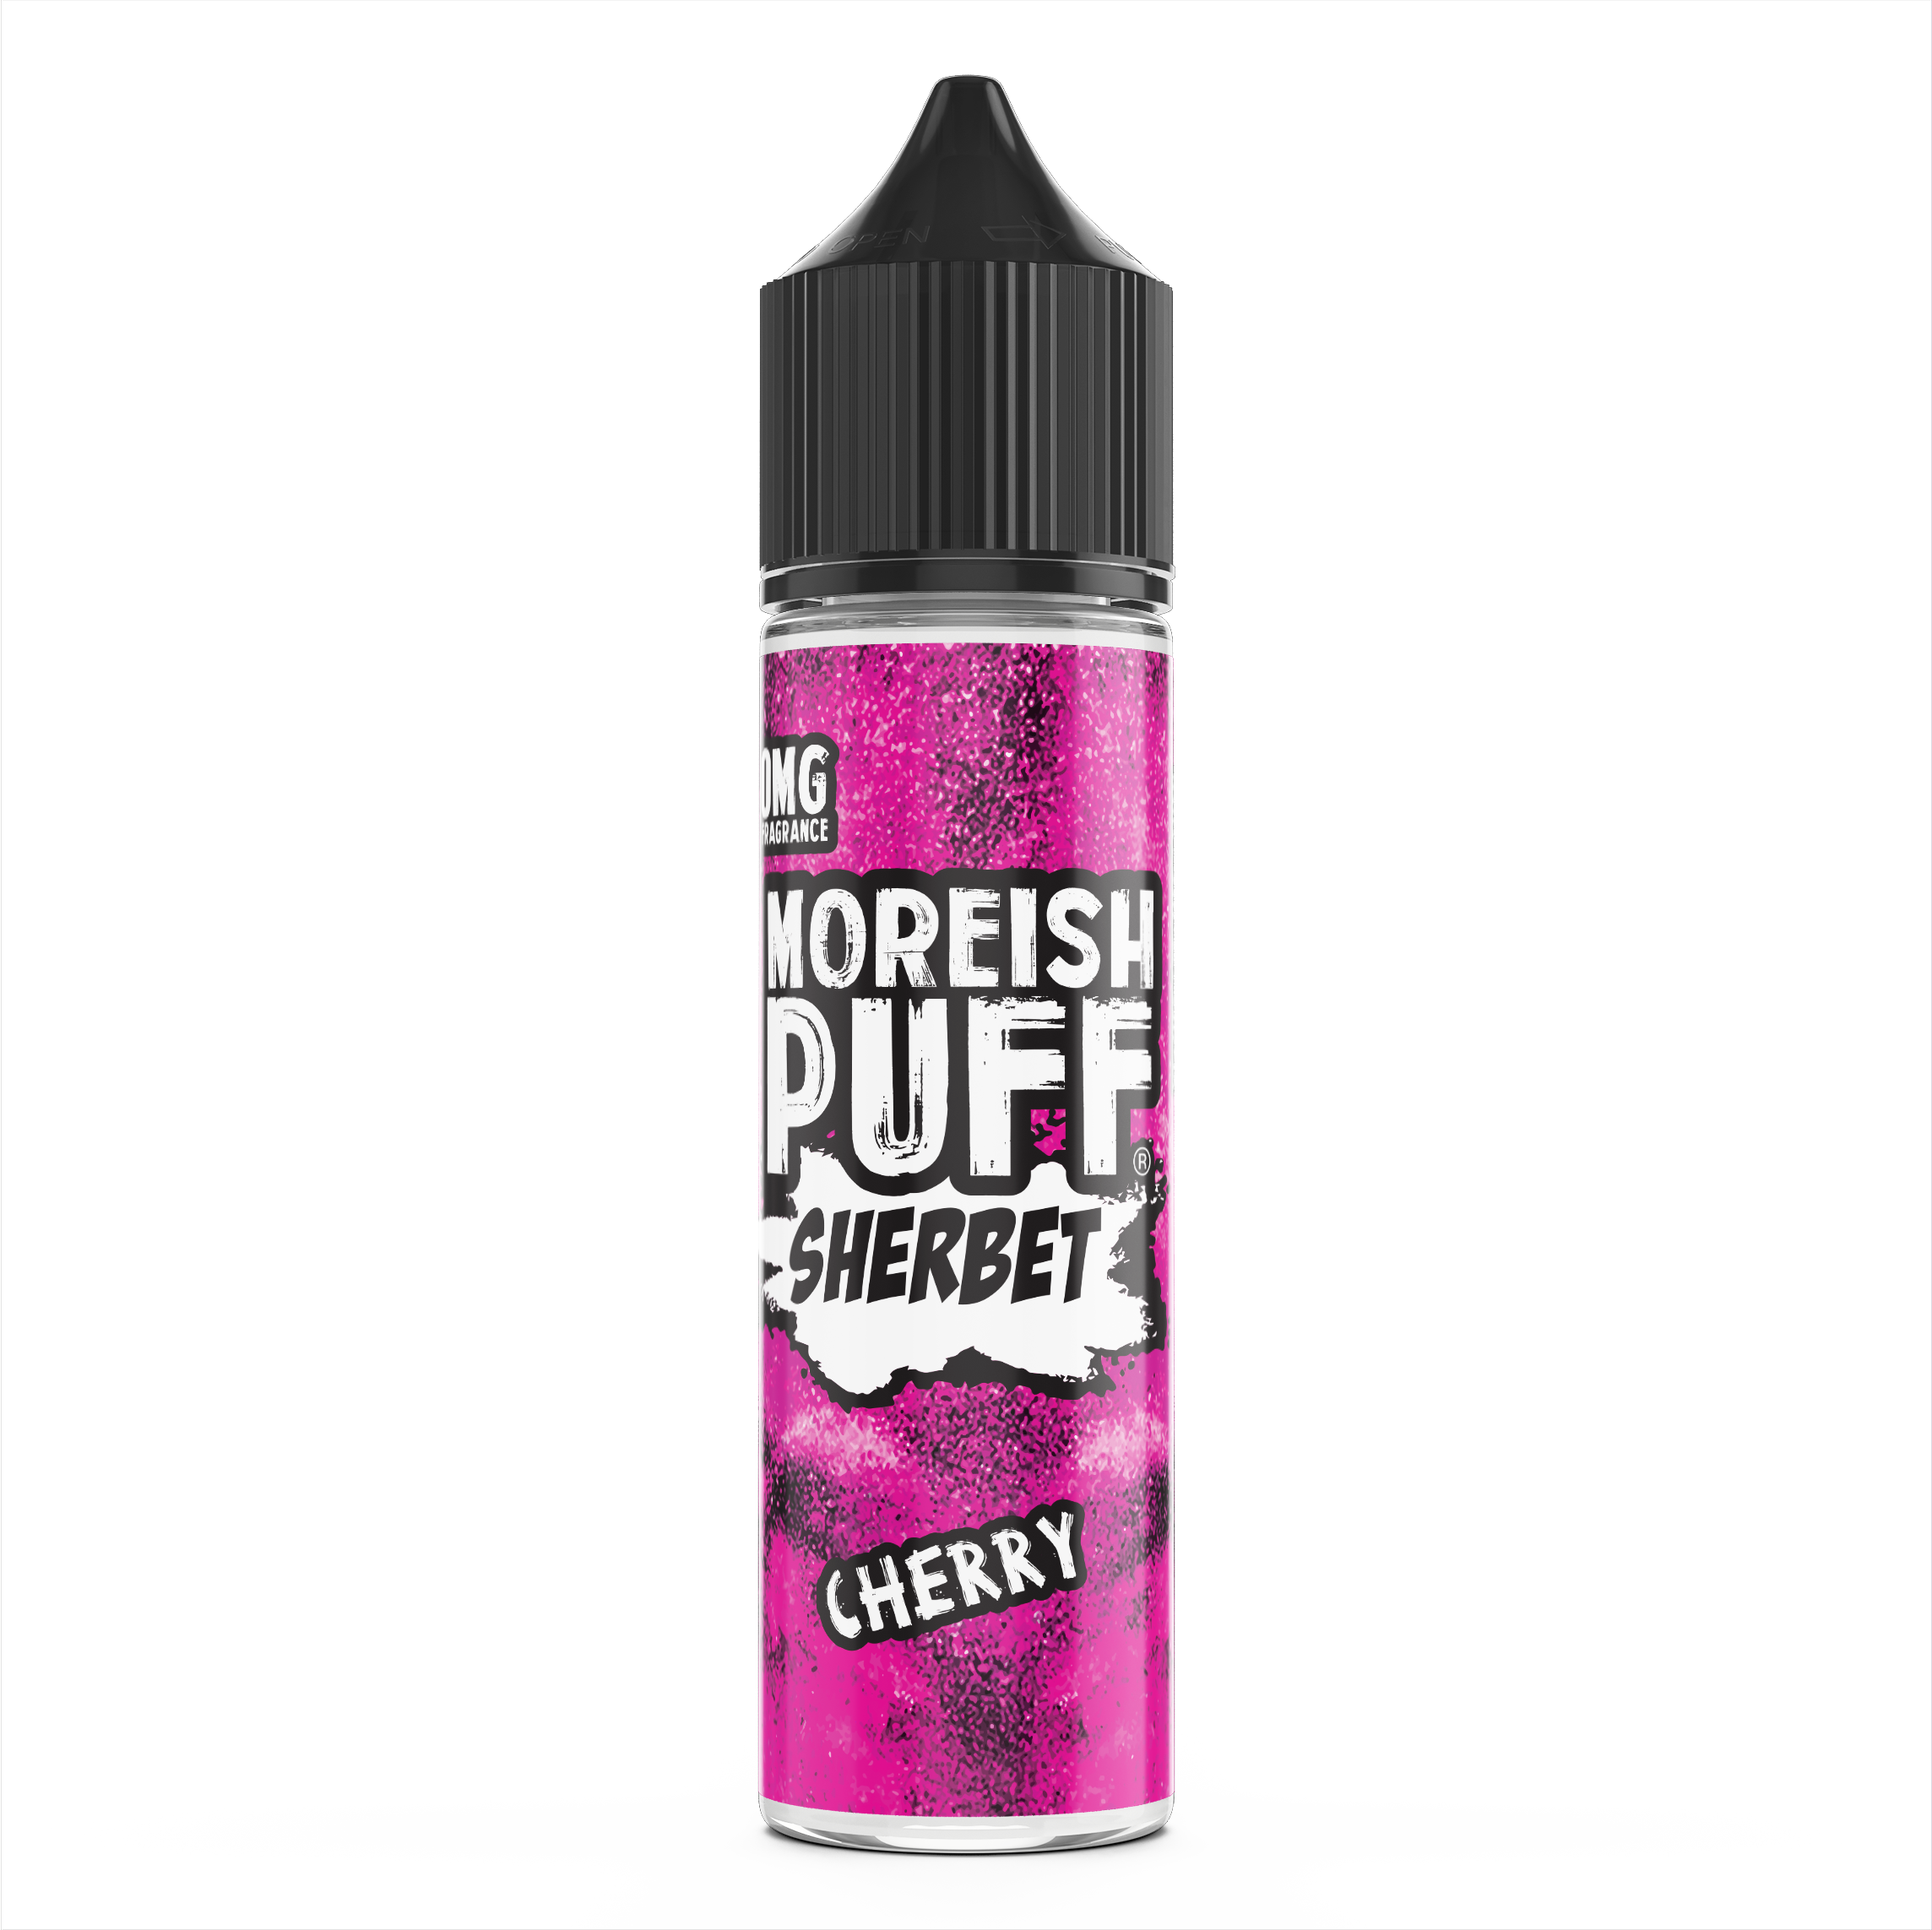 Moreish Puff Sherbet: Cherry Sherbet 0mg 50ml Shortfill E-Liquid